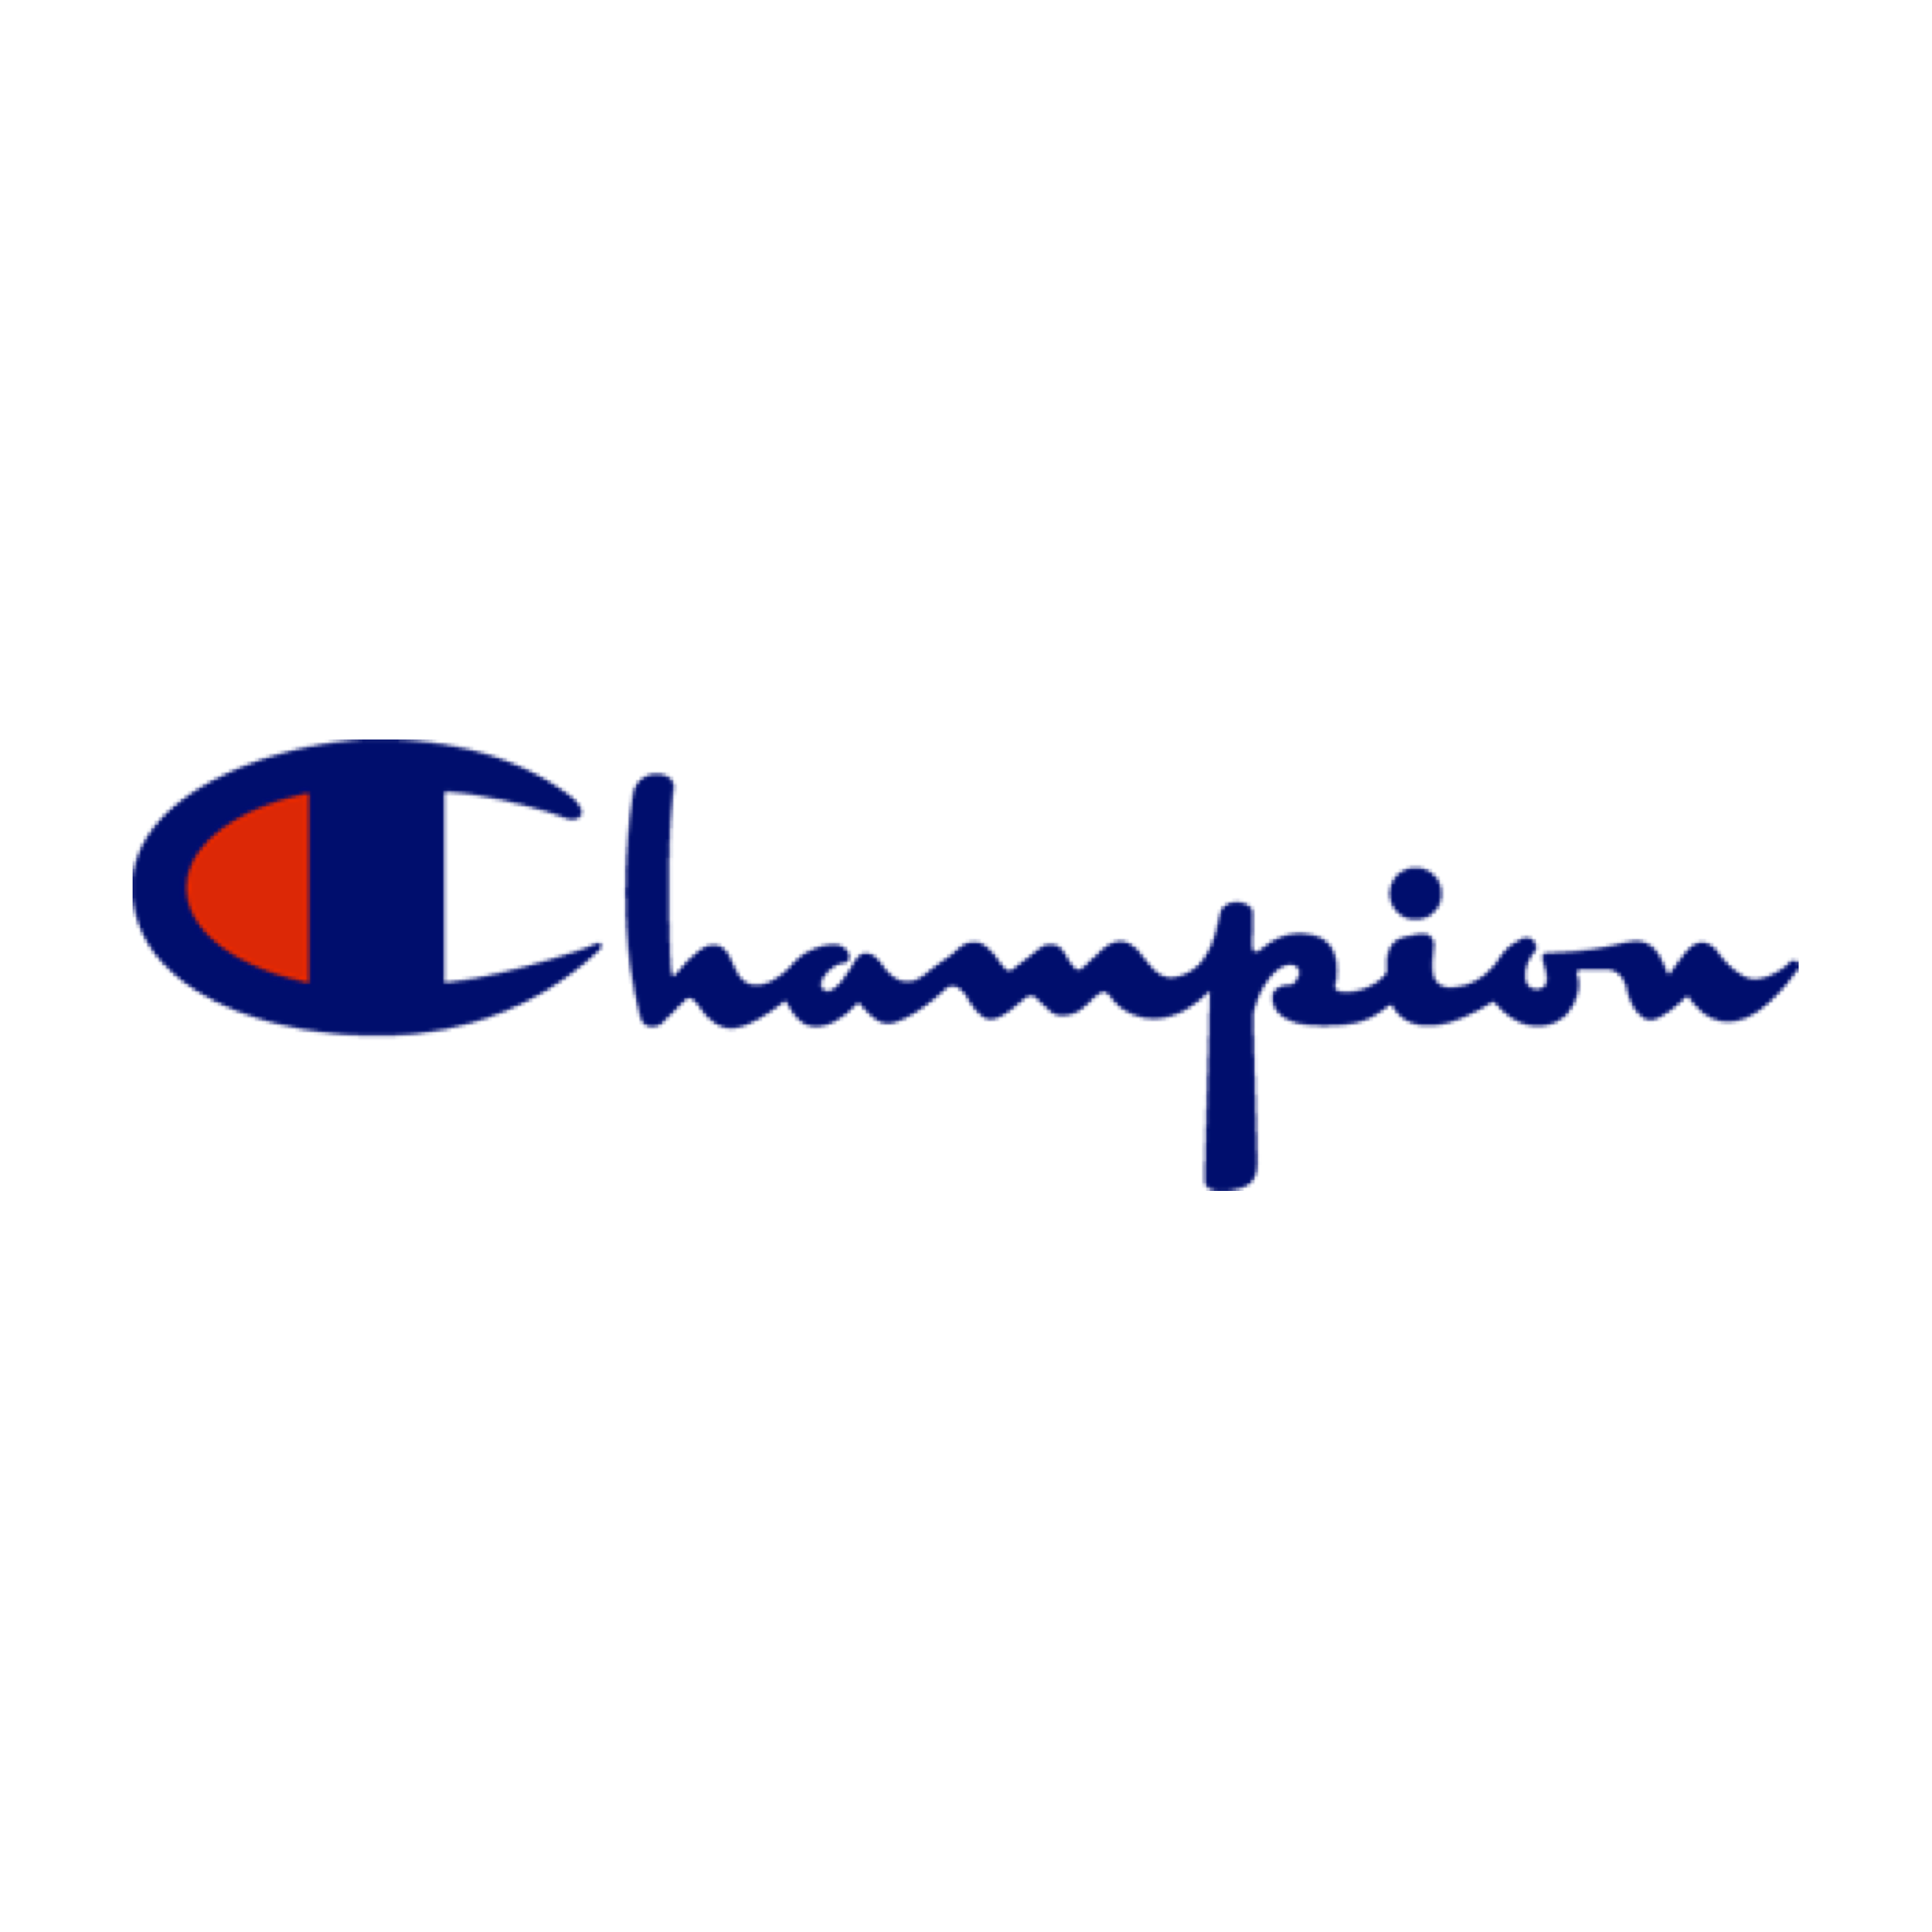 Blue Oval Brand Logo - Champion | BRANDS in 2019 | Champion logo, Champion, Logos